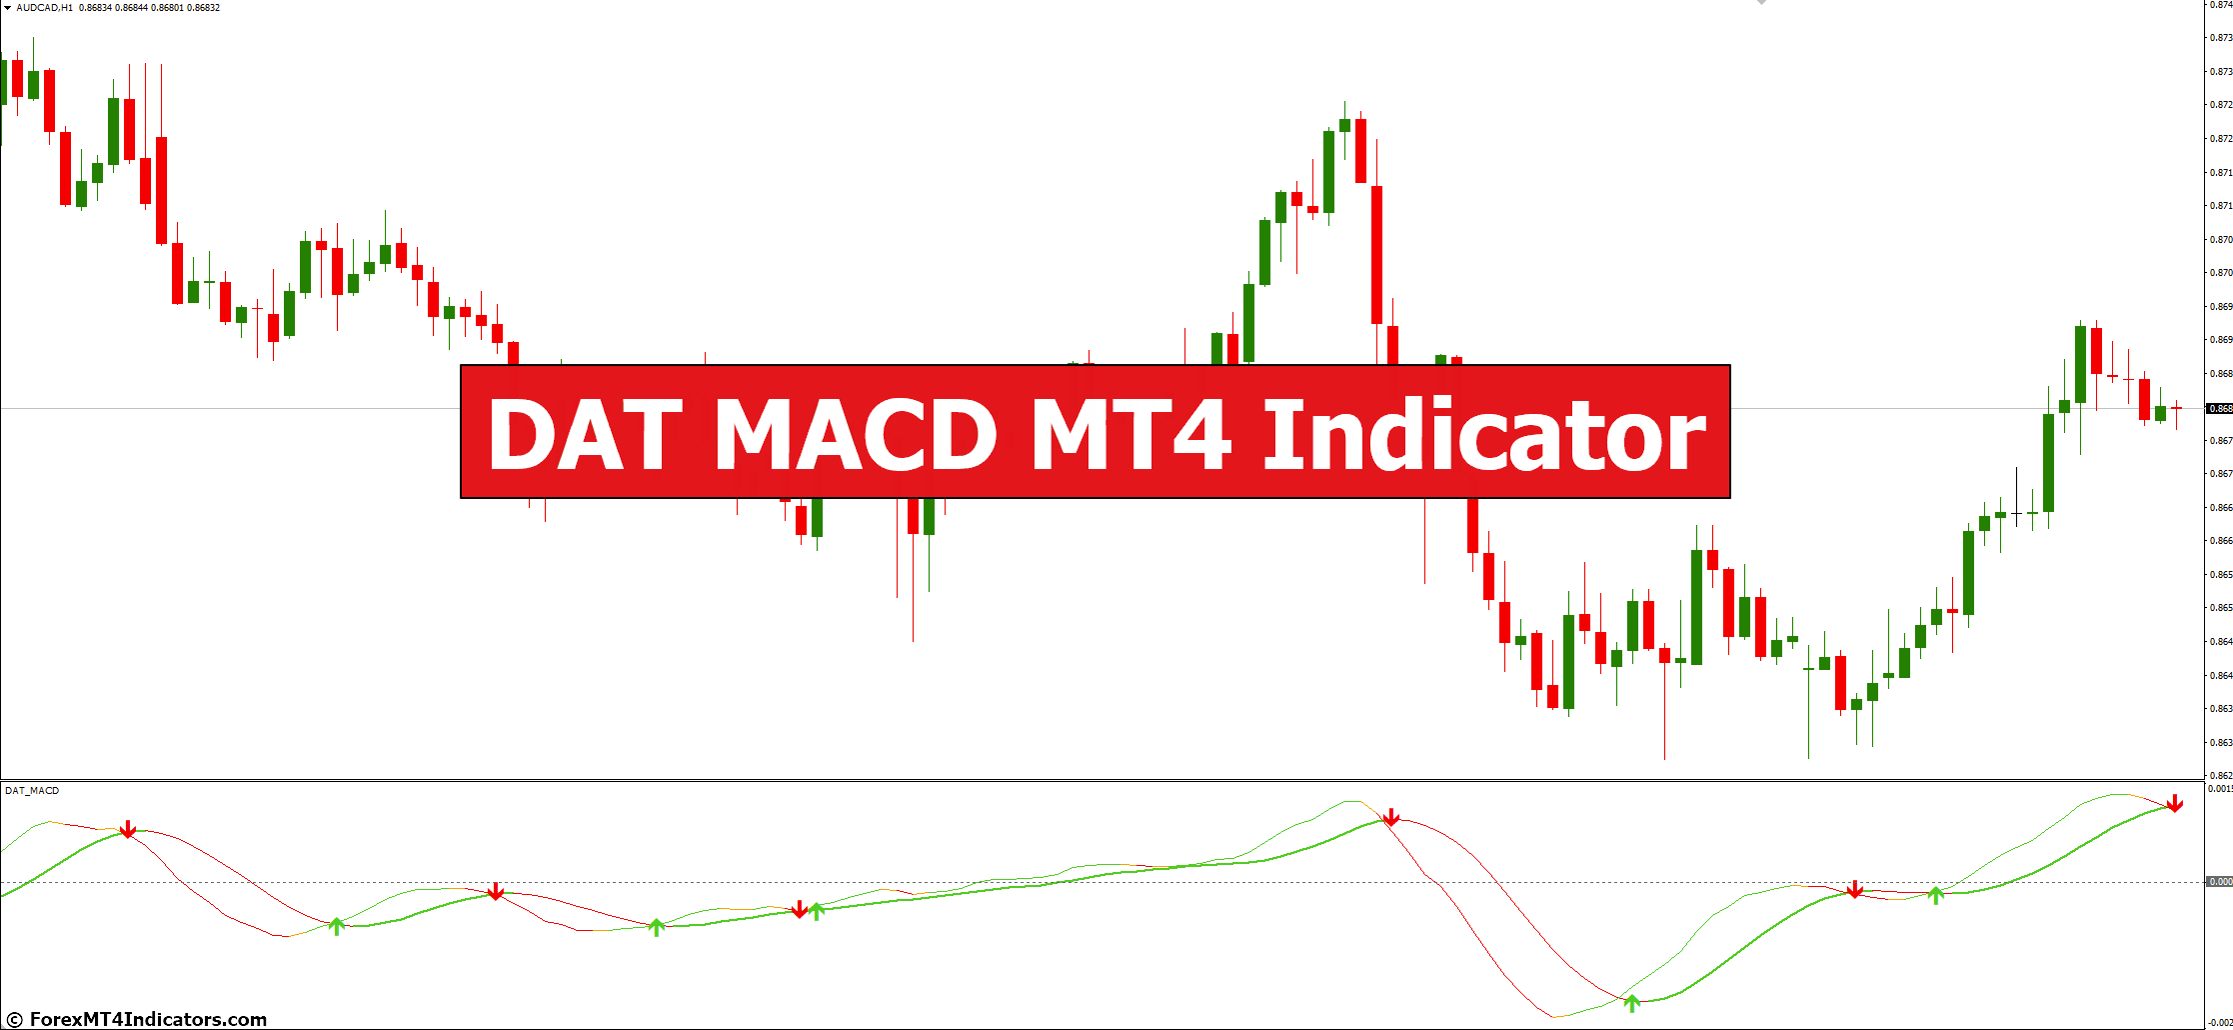 DAT MACD MT4 Indicator